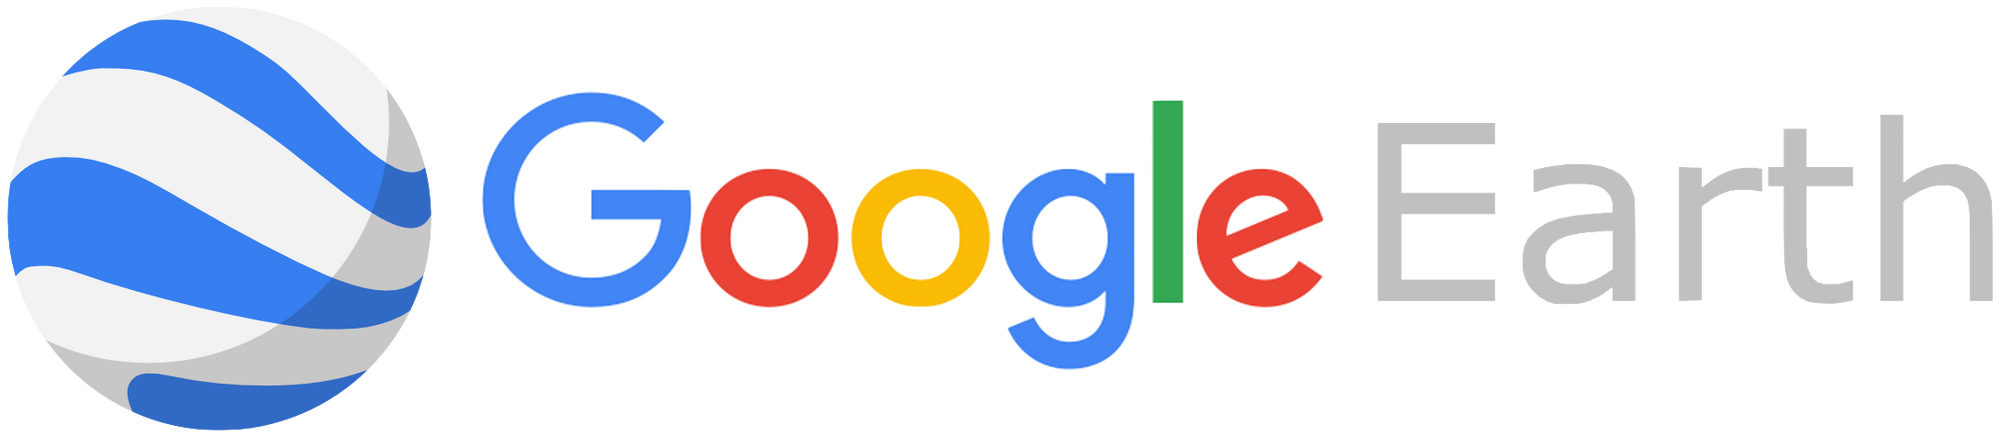 Image result for google earth logo